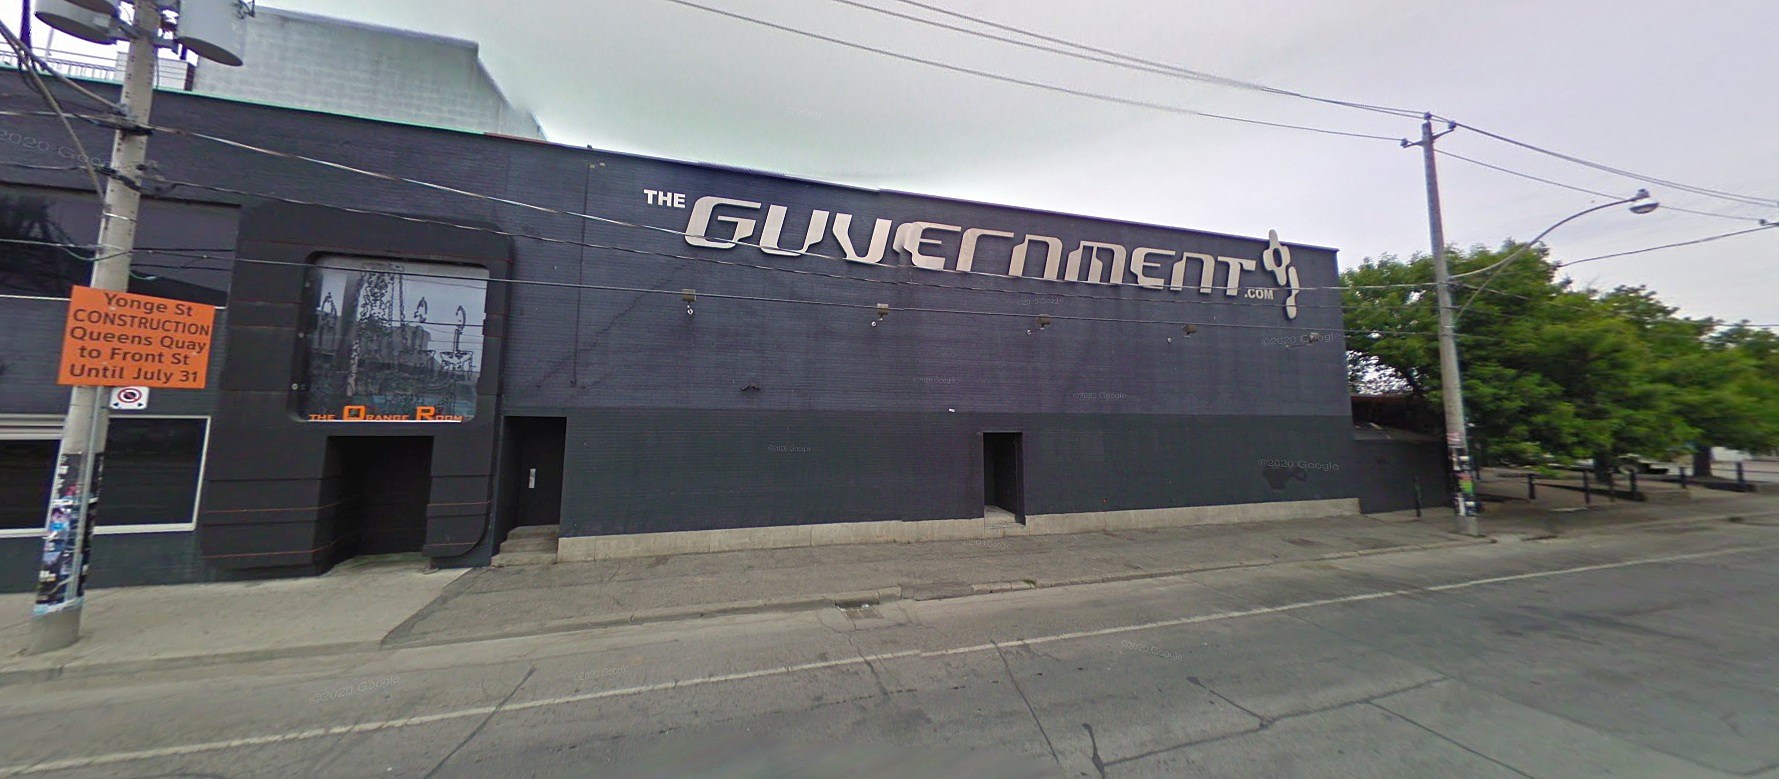 Legendary Nightlife: Remembering Guvernment Nightclub in Toronto